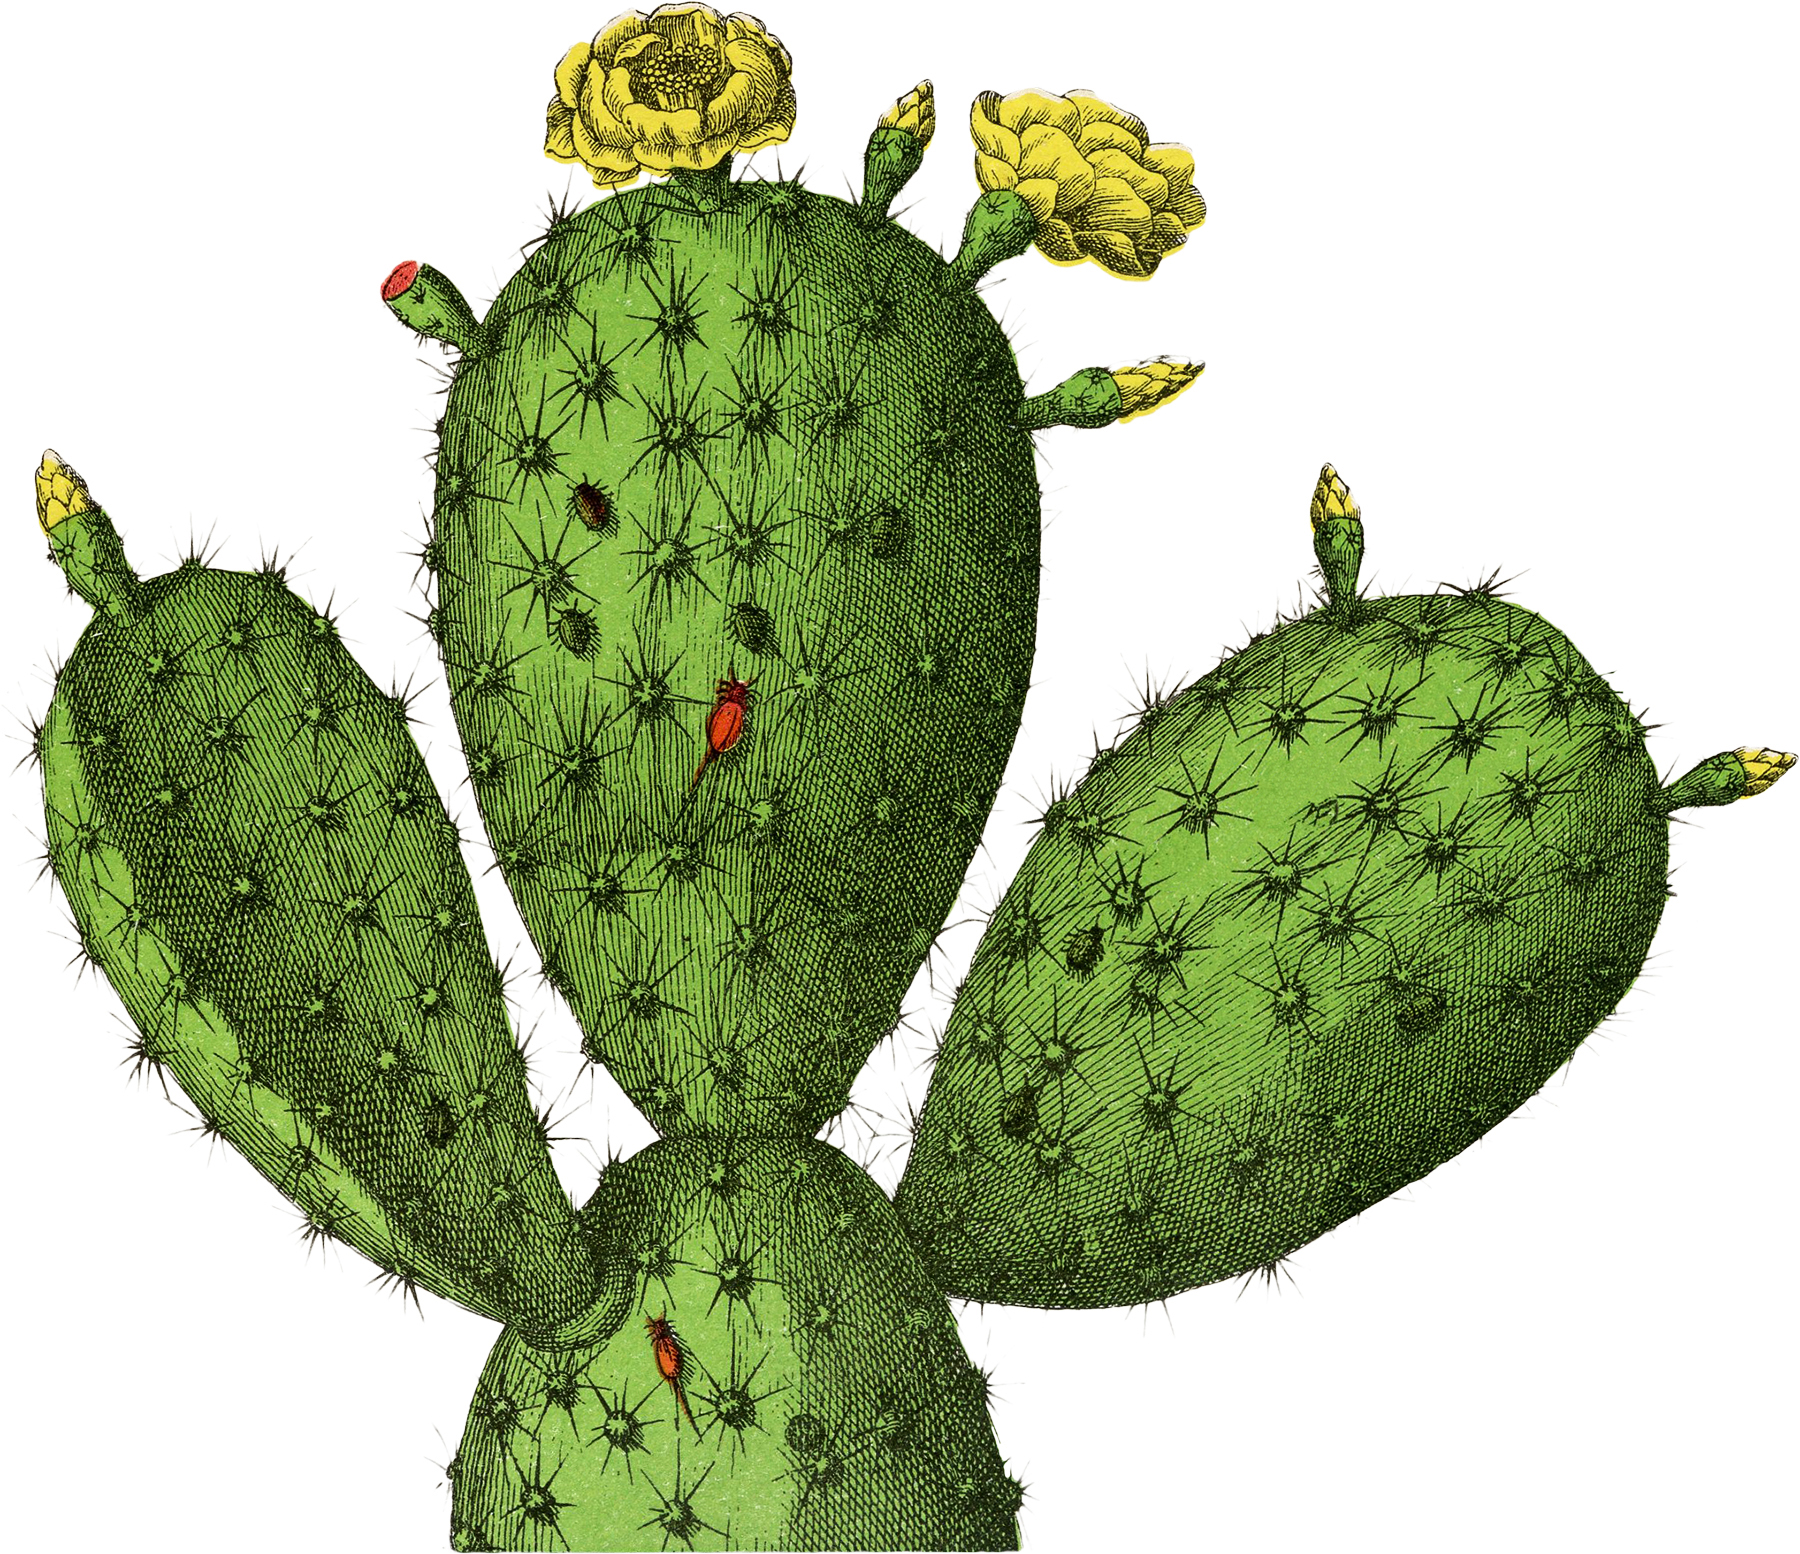 Vintage Cactus Botanical Image! - The Graphics Fairy